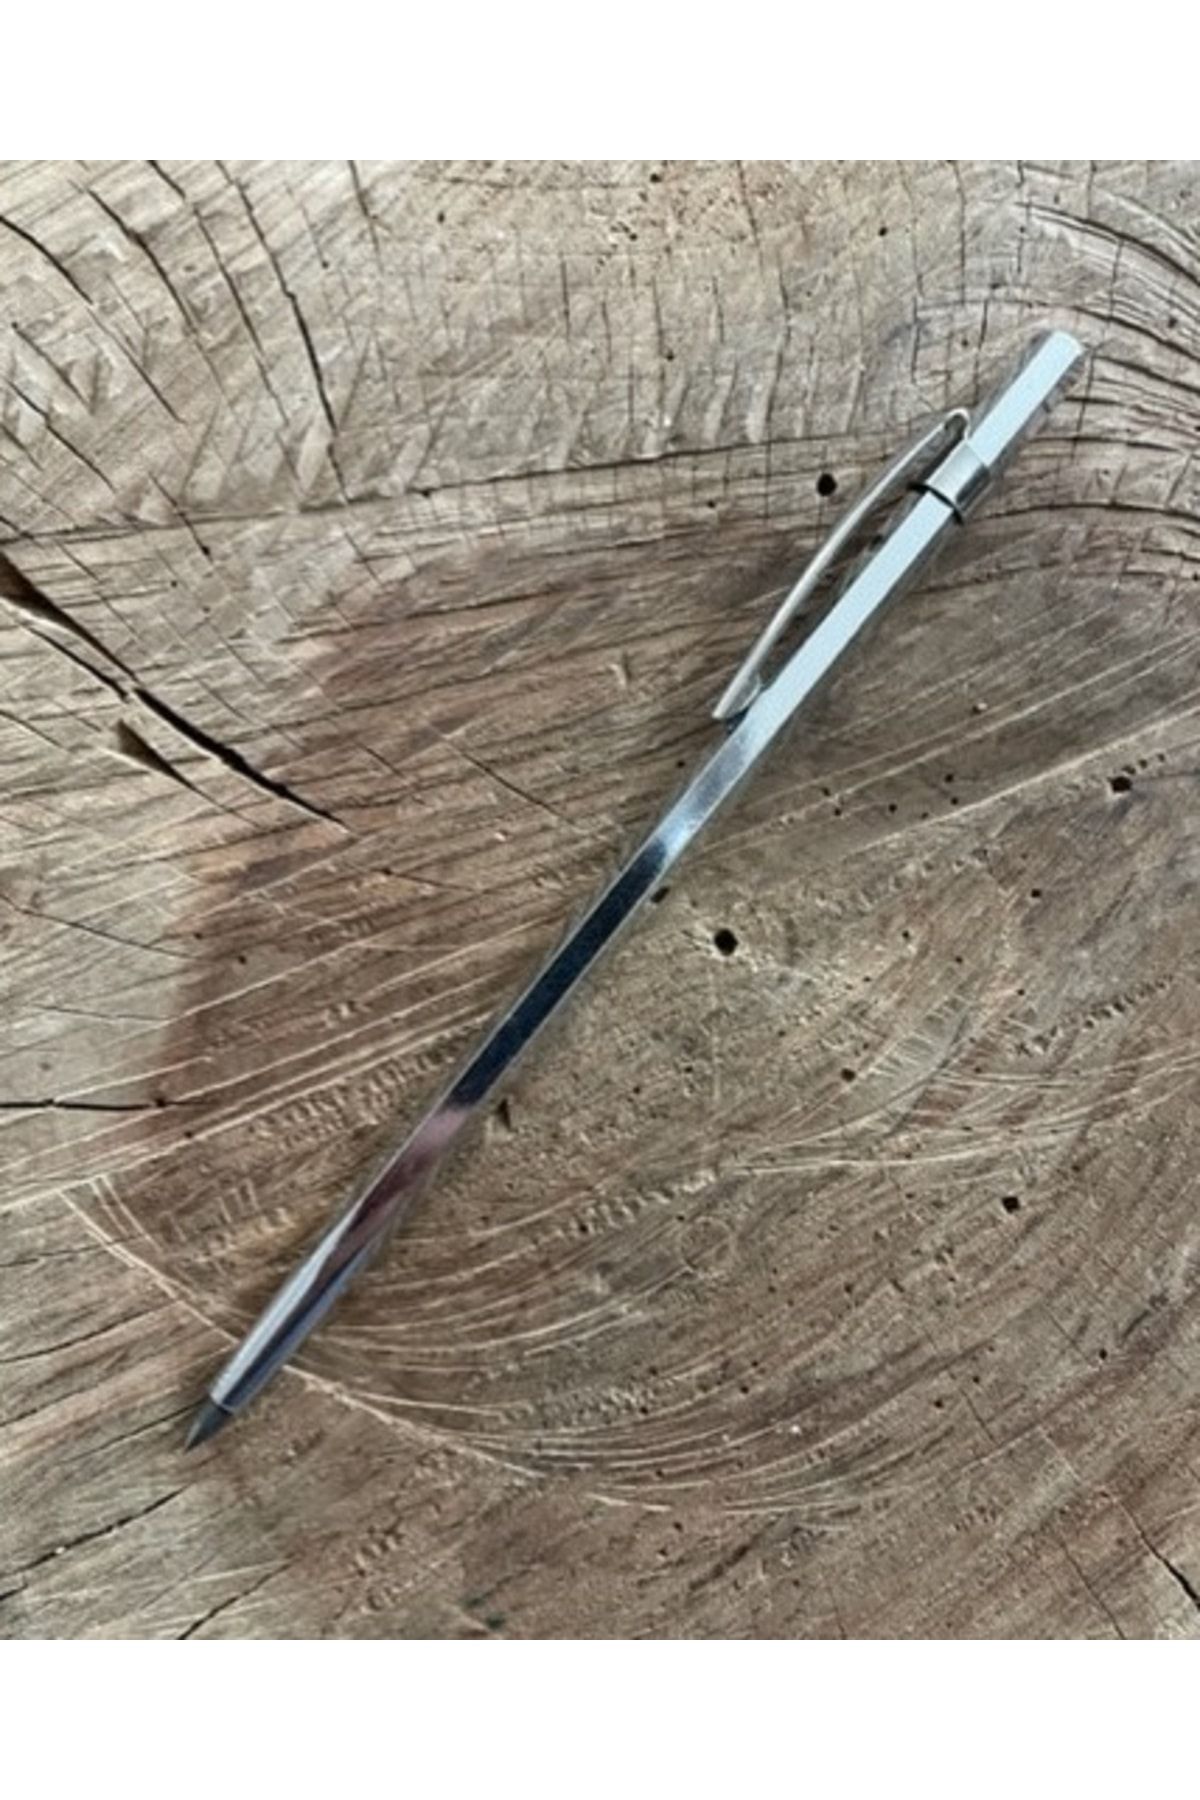 Würth Metal Çizik Kalemi Karbür Uçlu Metal Çizici Kalem